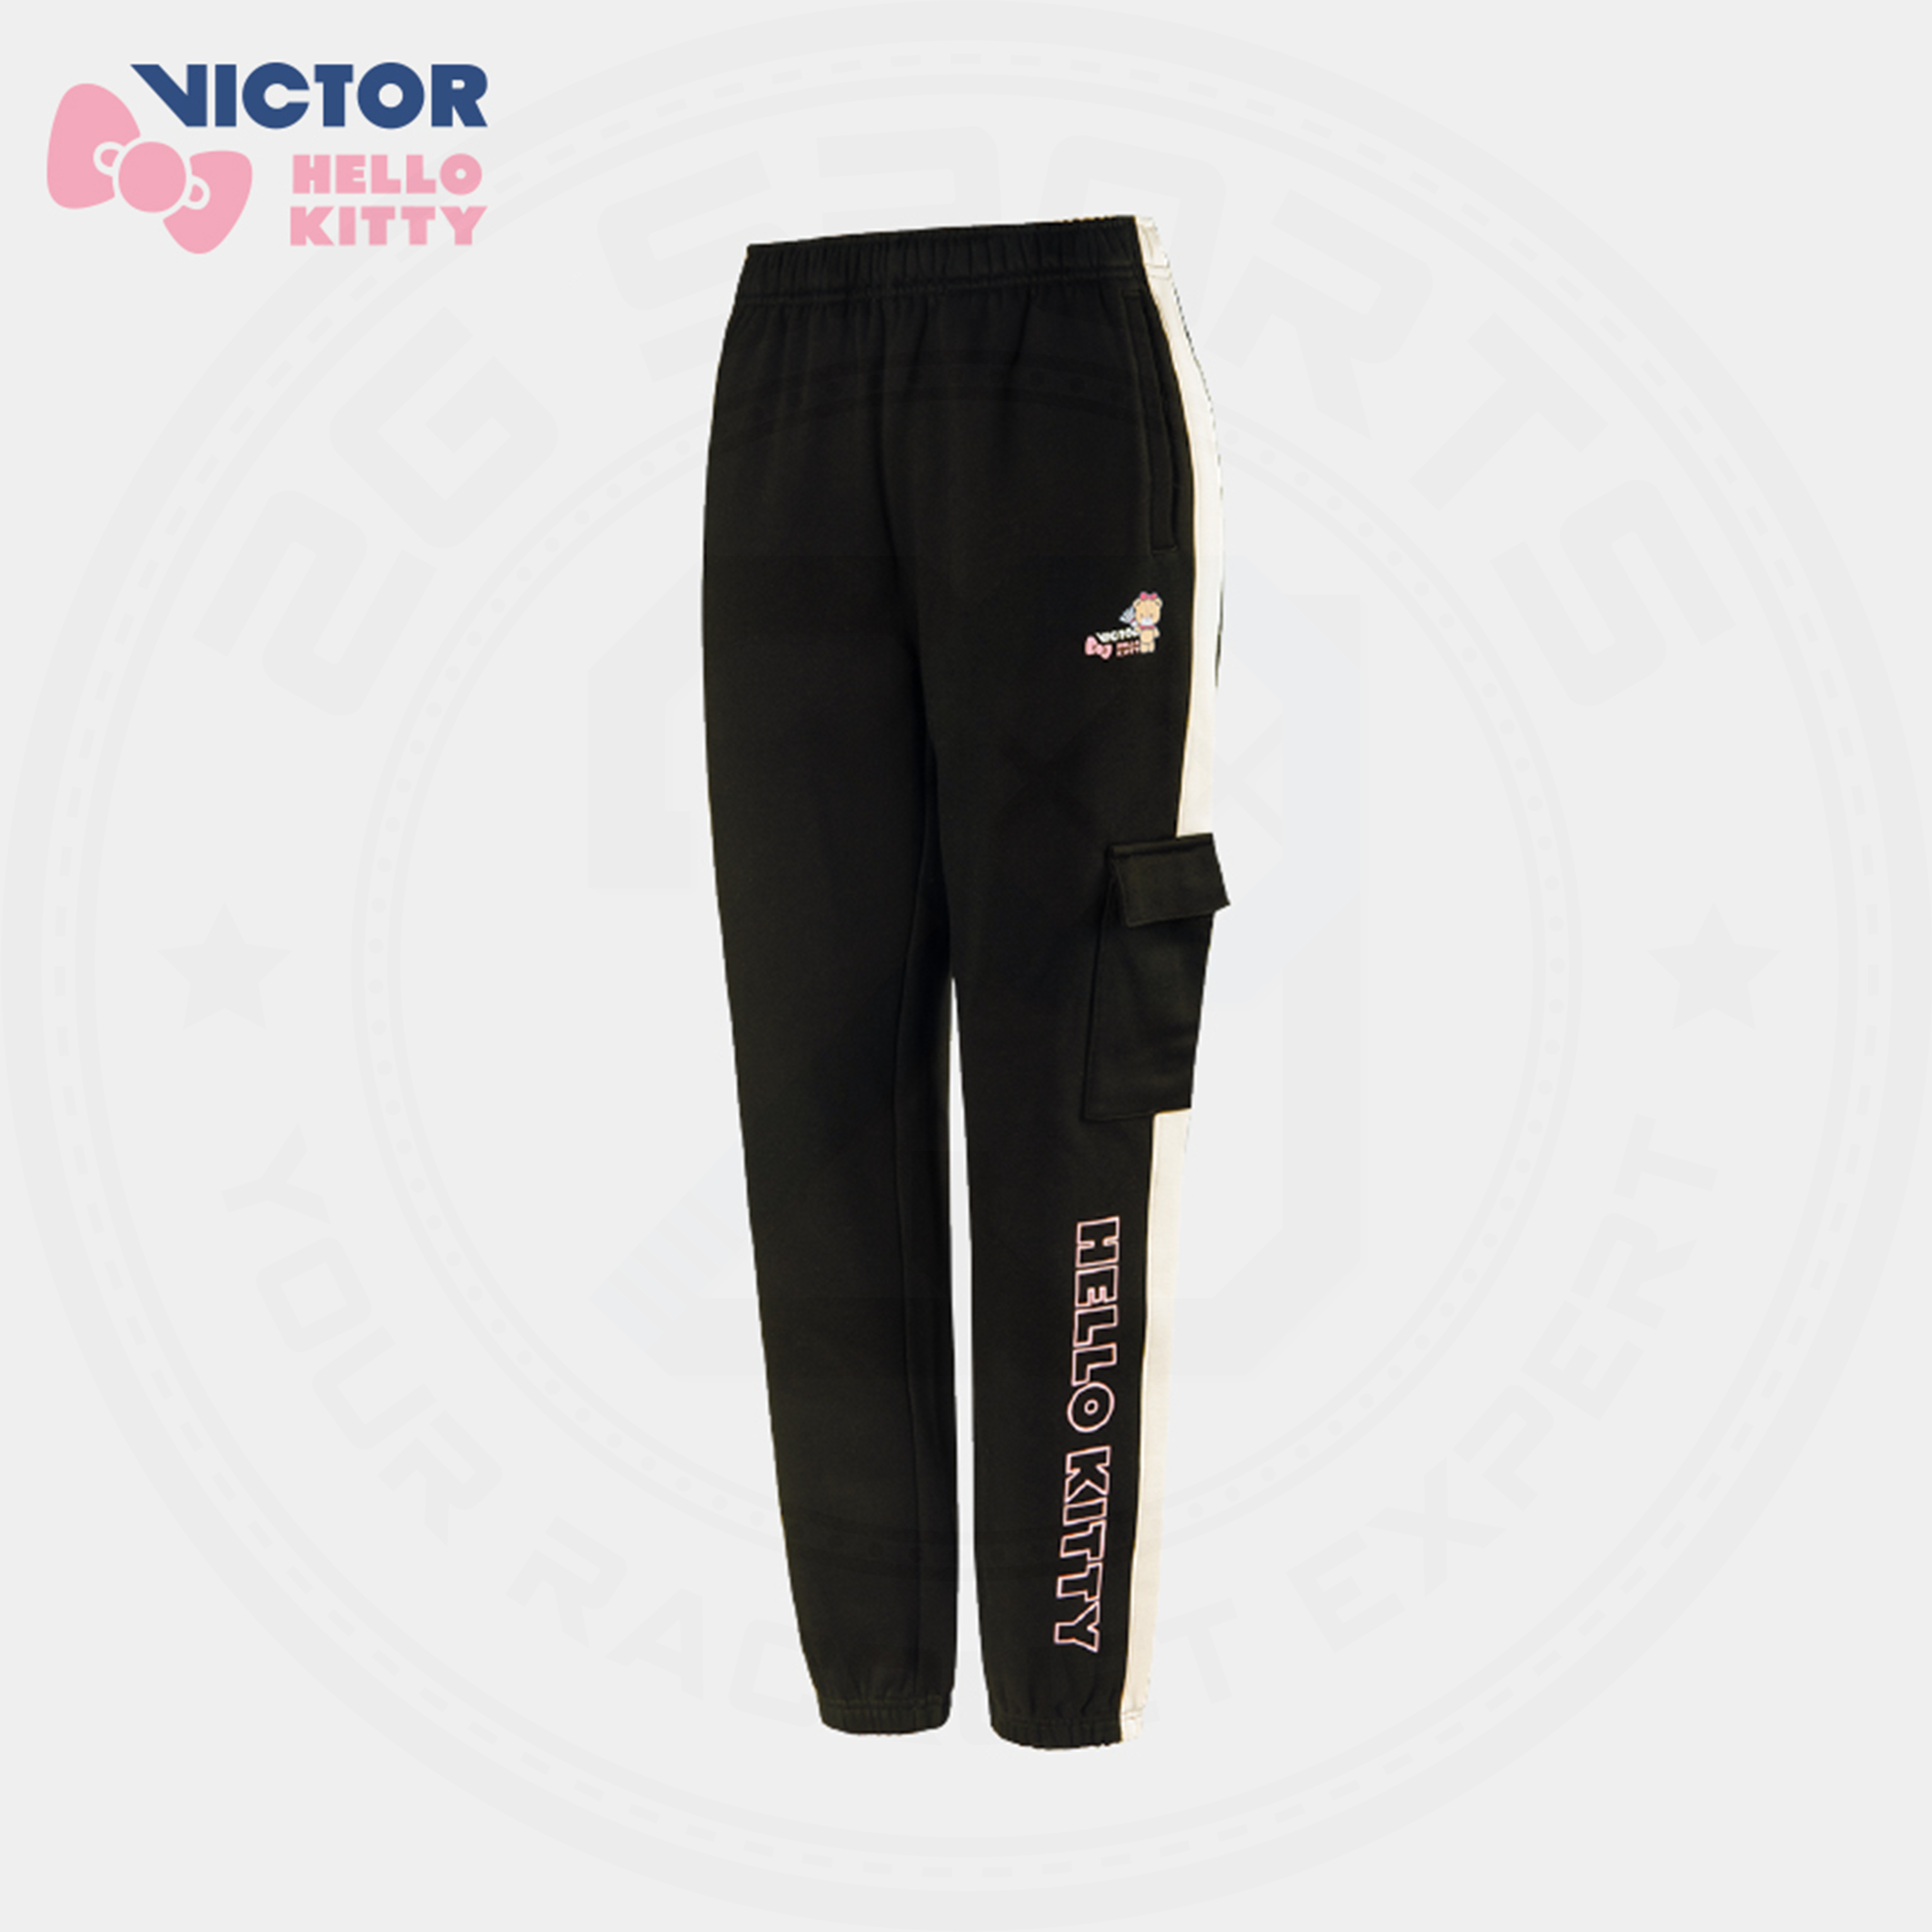 Victor X Hello Kitty P-KT208 Pants WOMEN'S